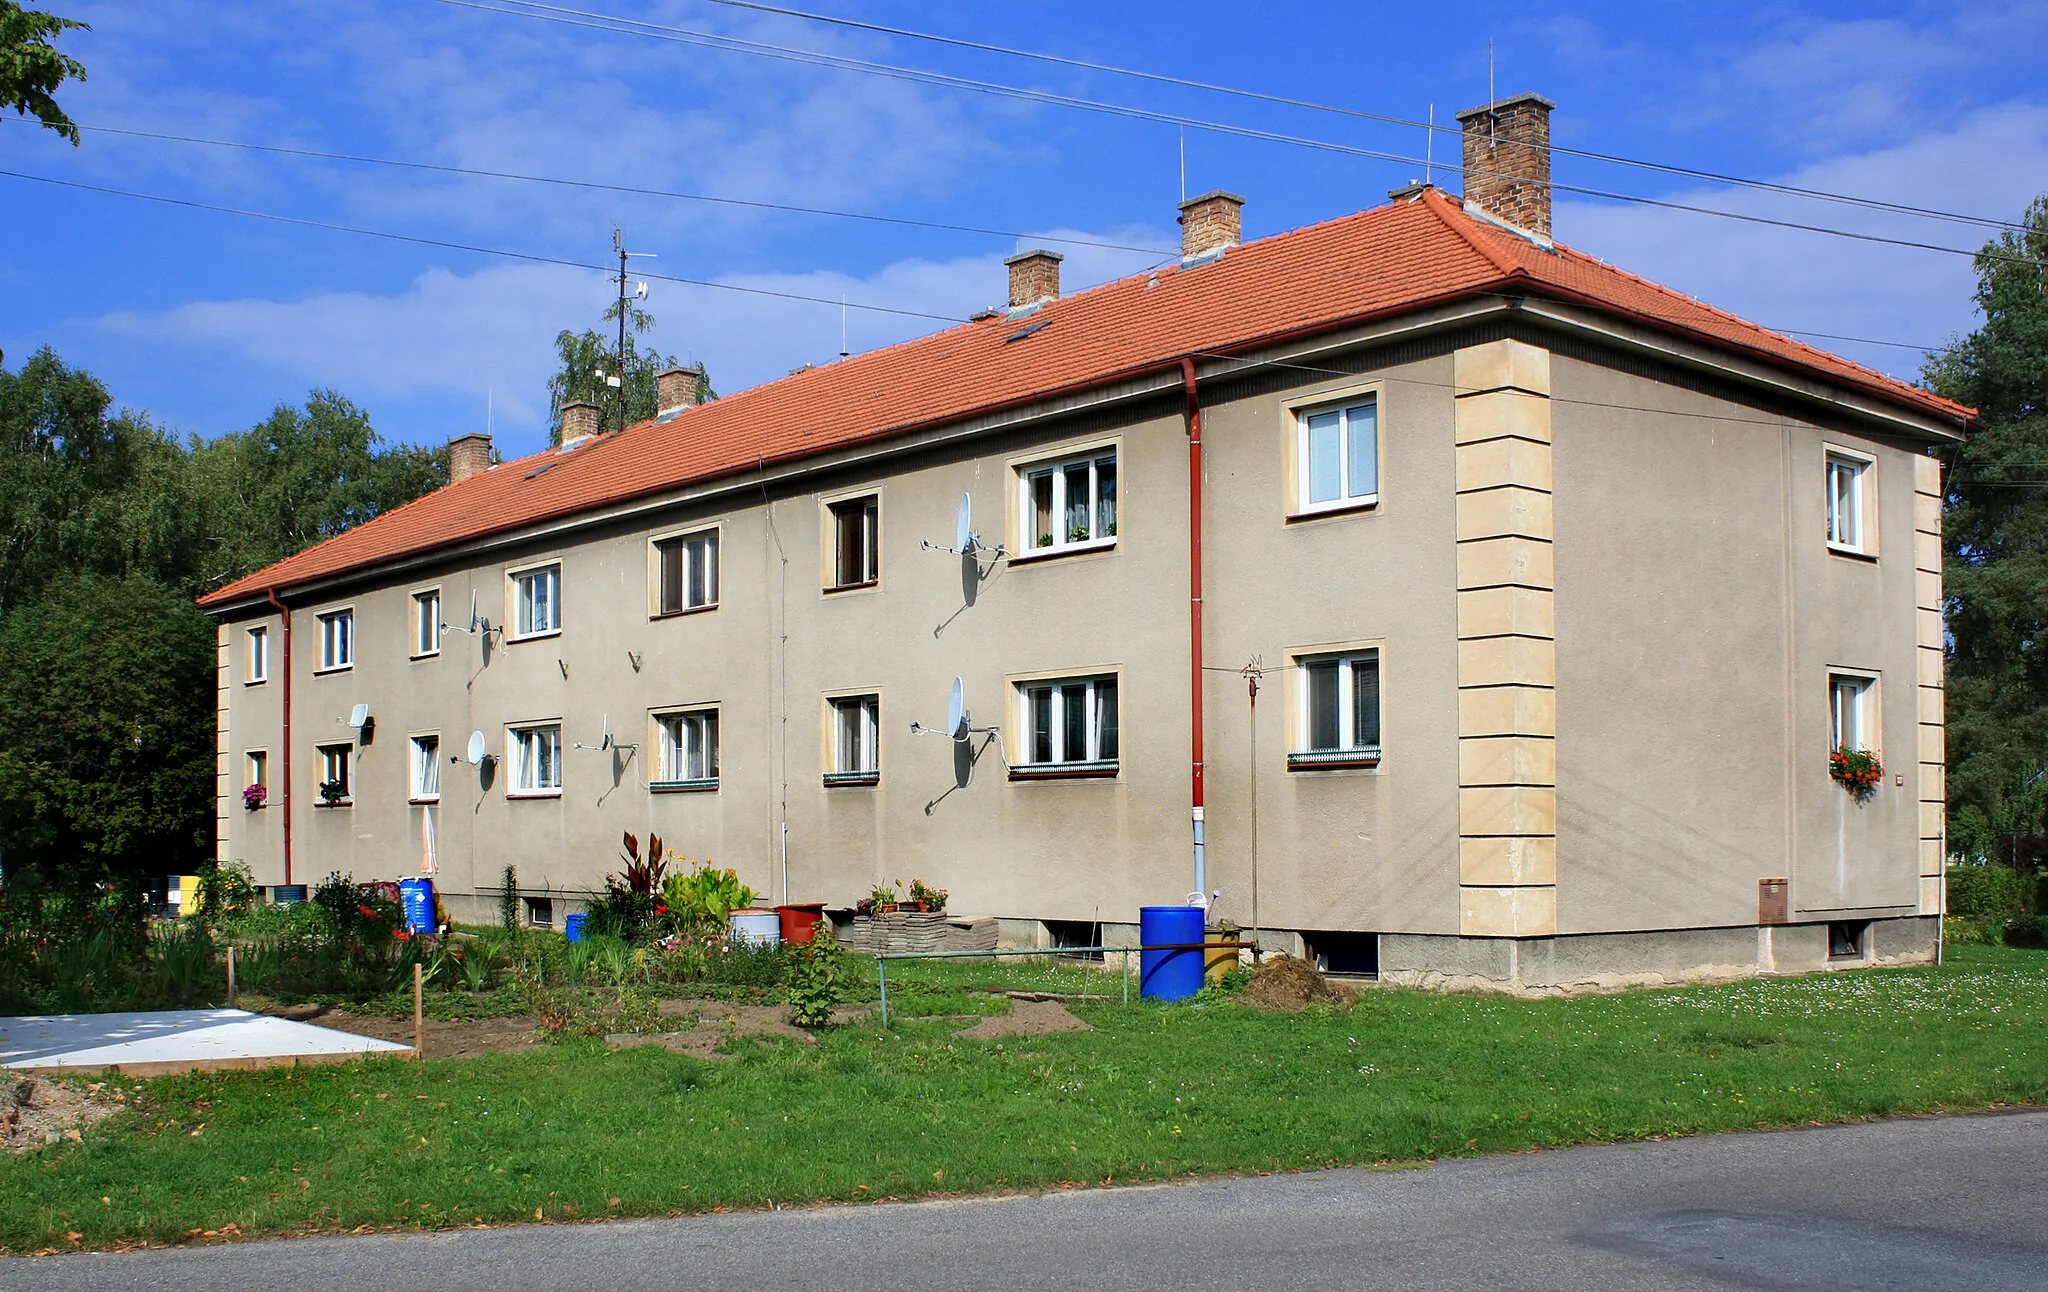 Photo showing: Tenement house in Nová street in Luštěnice, Czech Republic